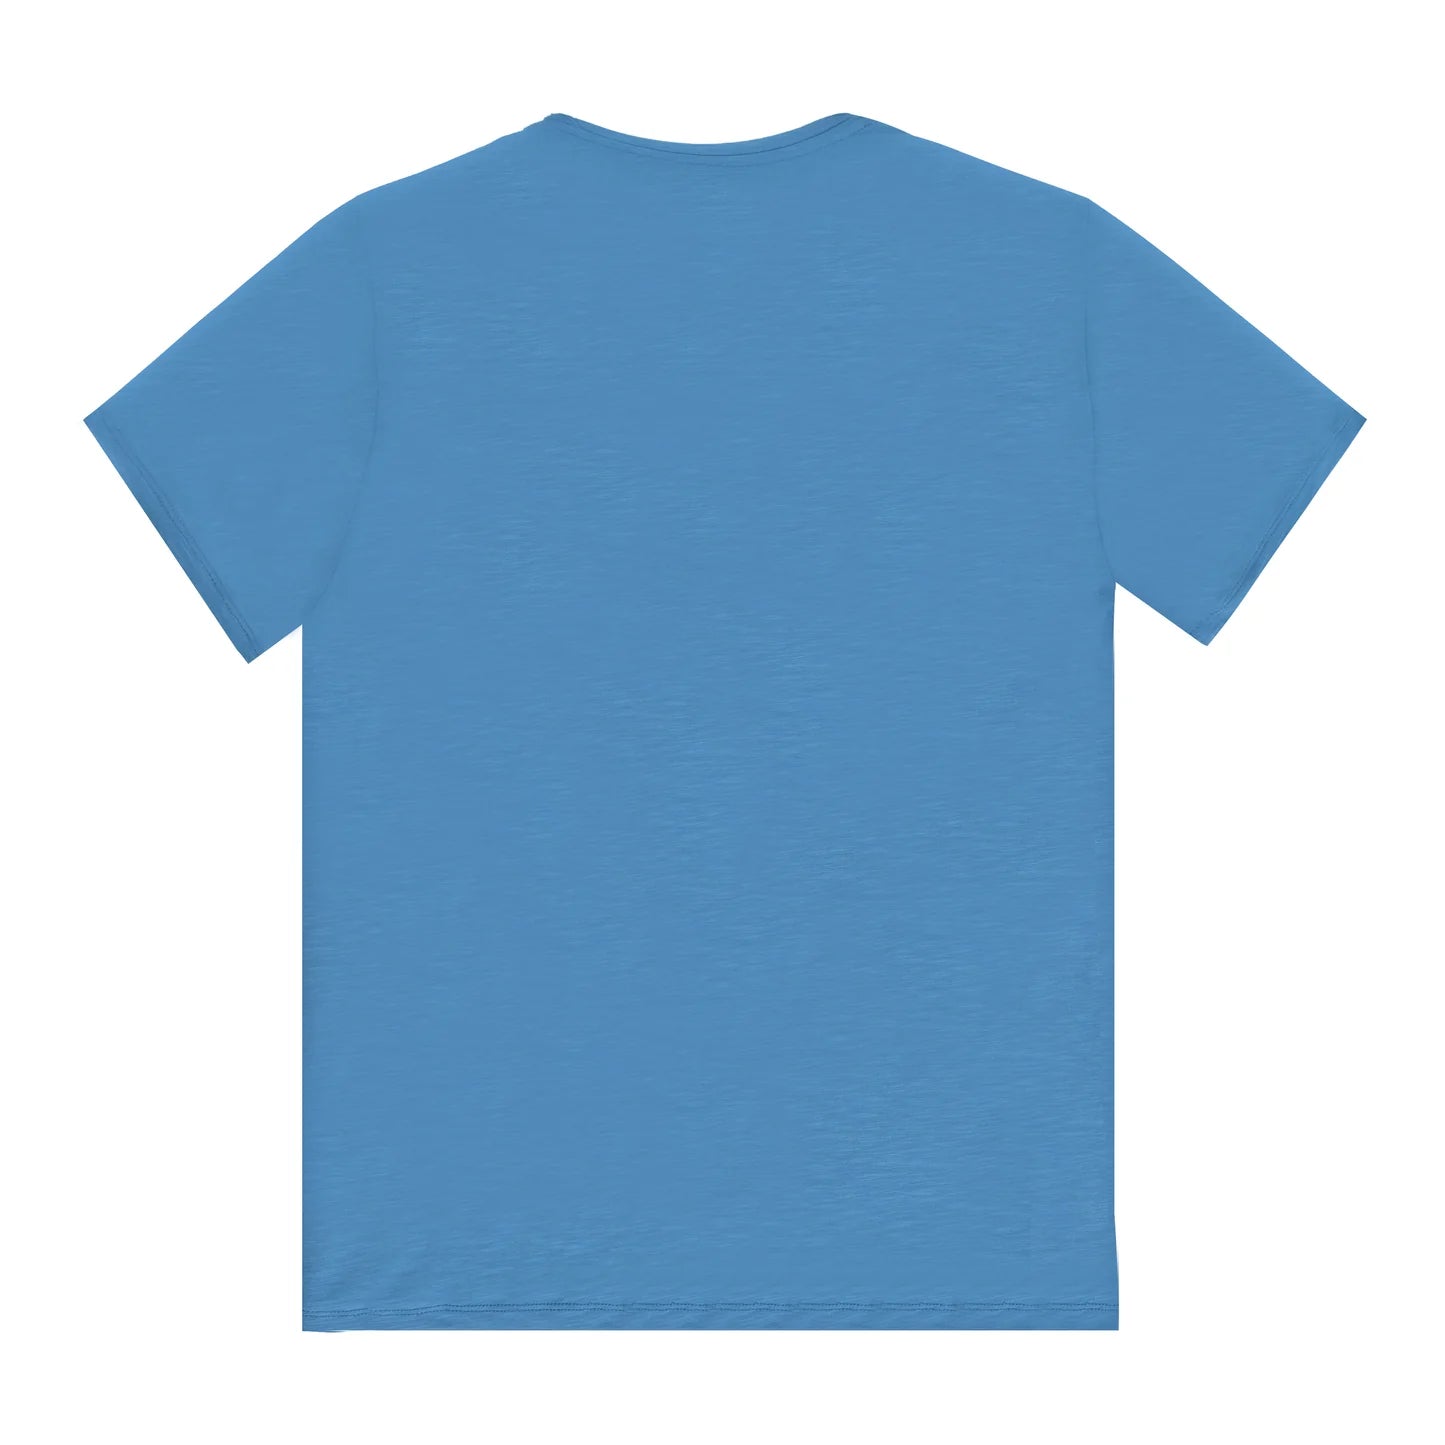 Rodolfo-BlueAtoll T-shirts back view